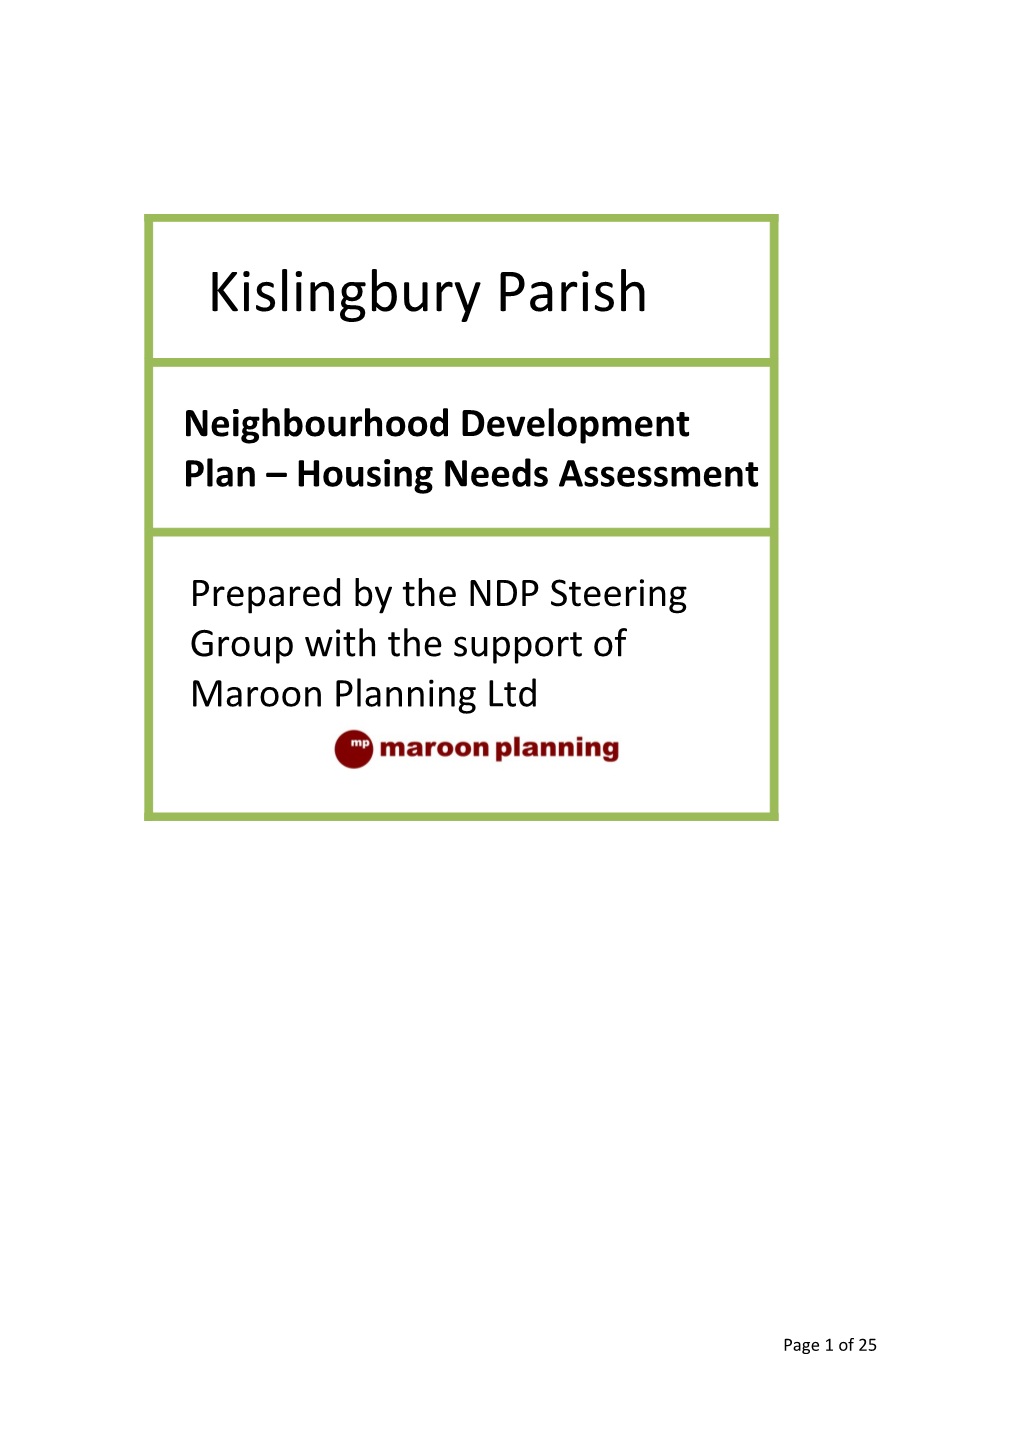 3. Developments in Kislingbury from 2007 to 2014 6